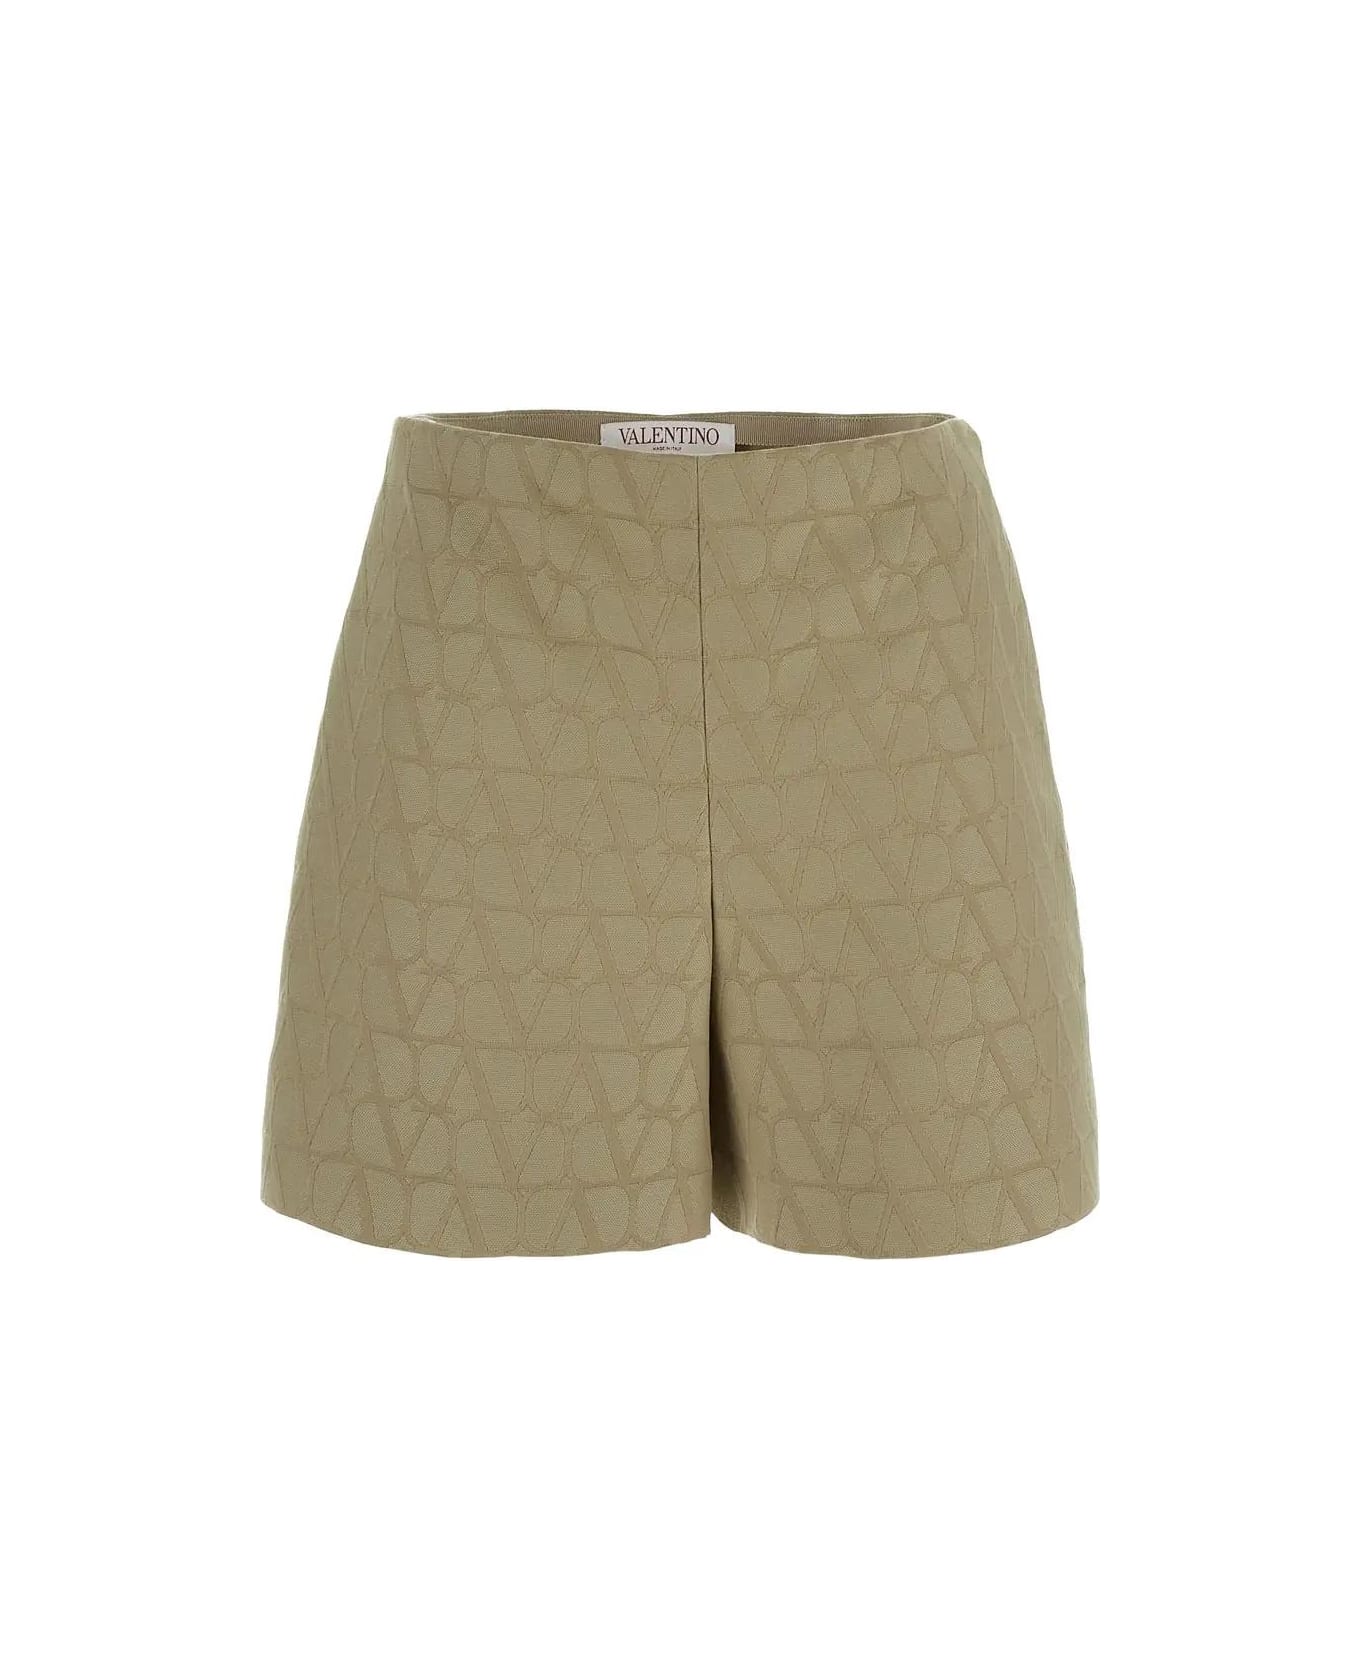 Valentino Logoed Shorts - Beige ショートパンツ